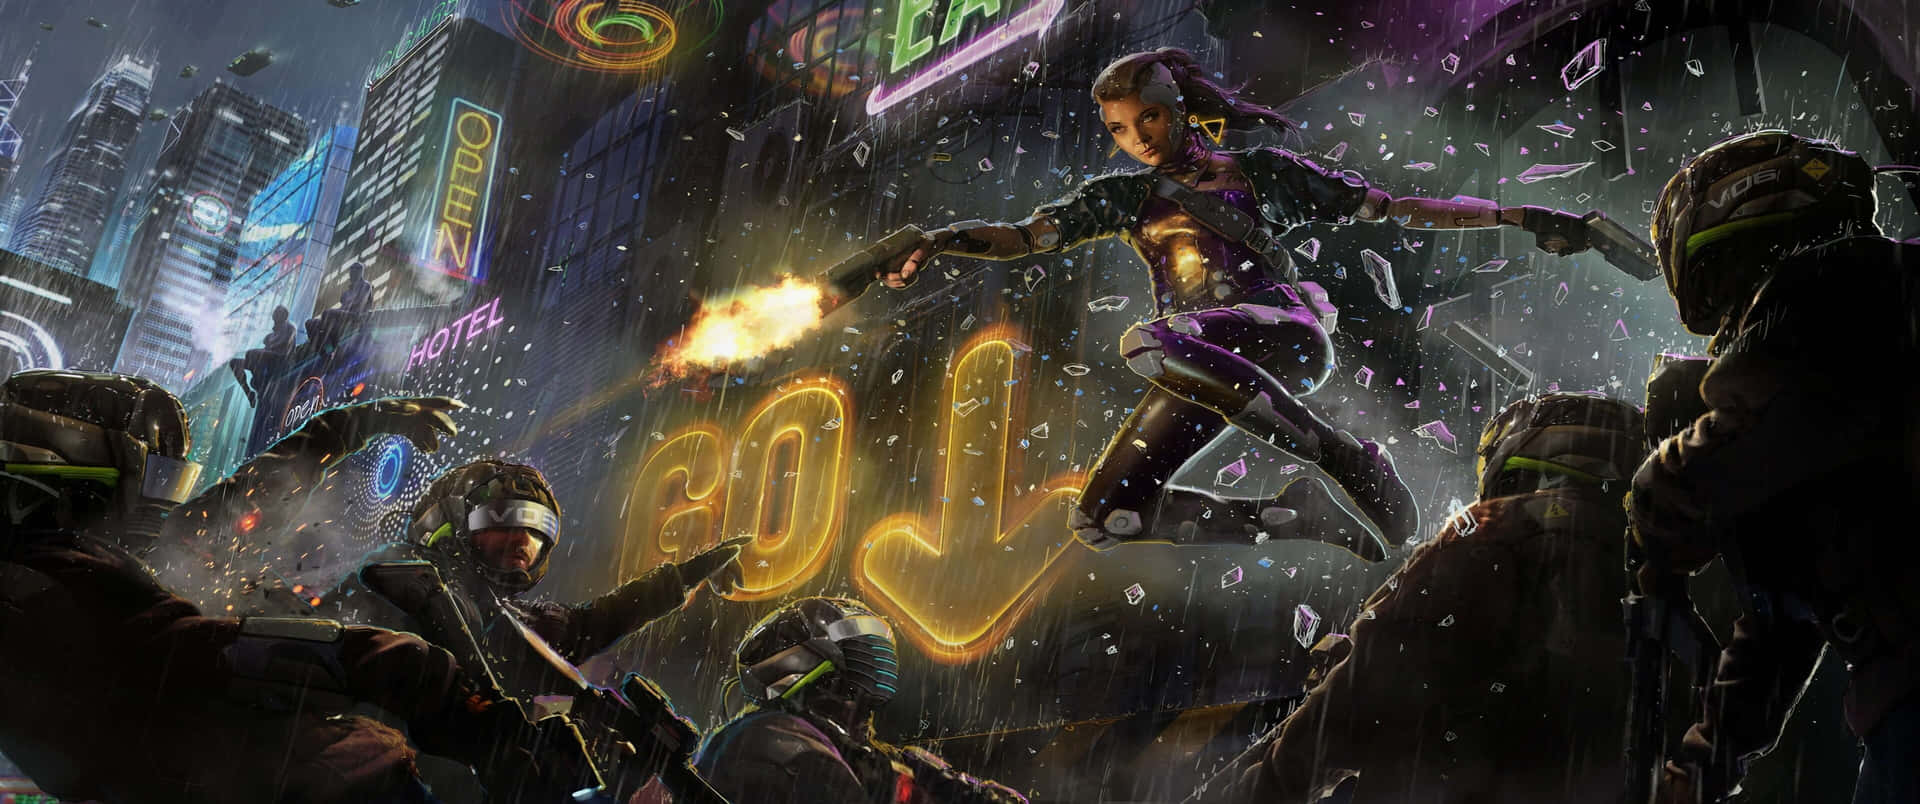 3440x1440p Cyberpunk 2077 Background People Fighting In The Rain